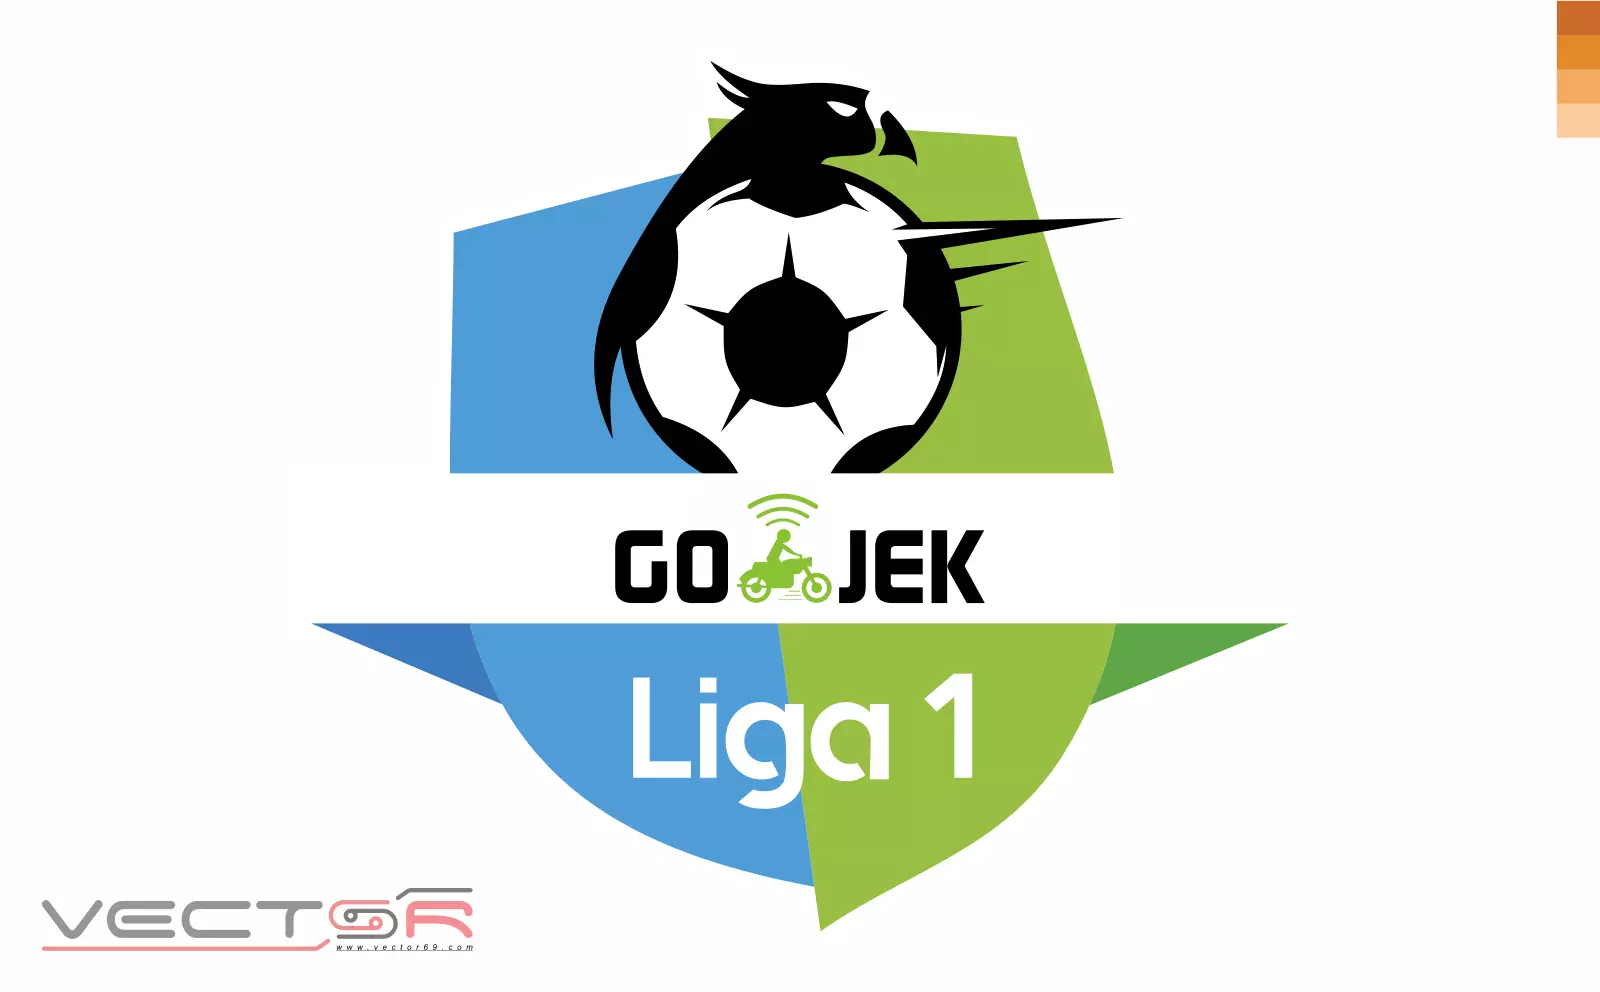 Gojek Liga 1 Indonesia Logo - Download Vector File AI (Adobe Illustrator)